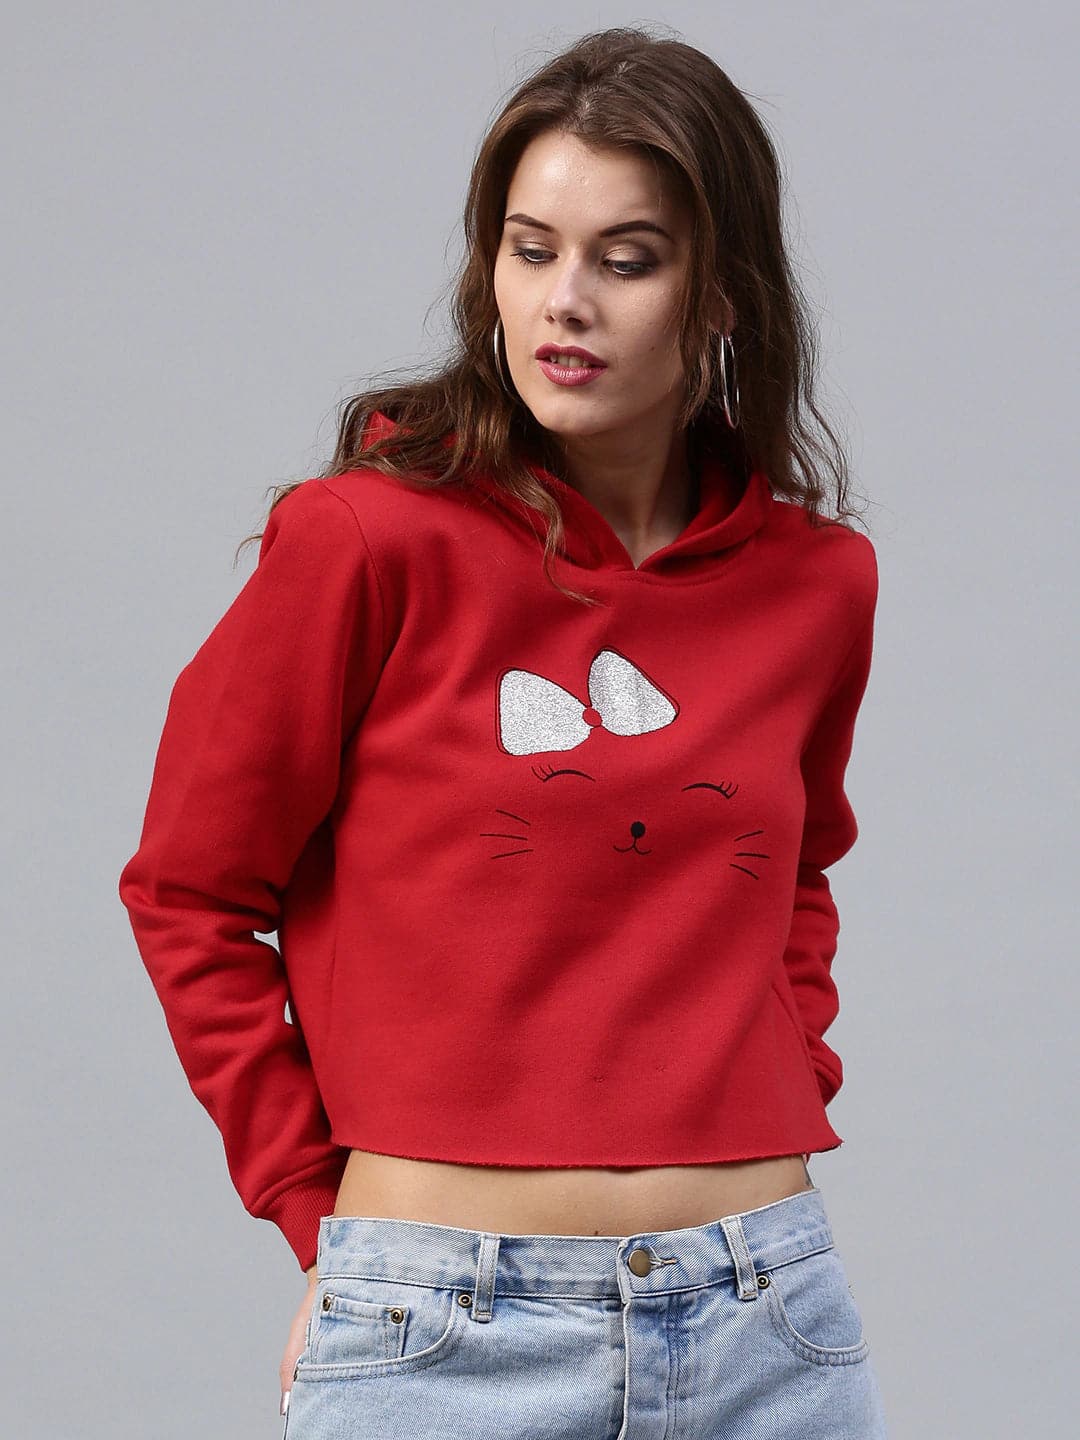 Bow Kitty Red Sweatshirt-Sweatshirts-SASSAFRAS